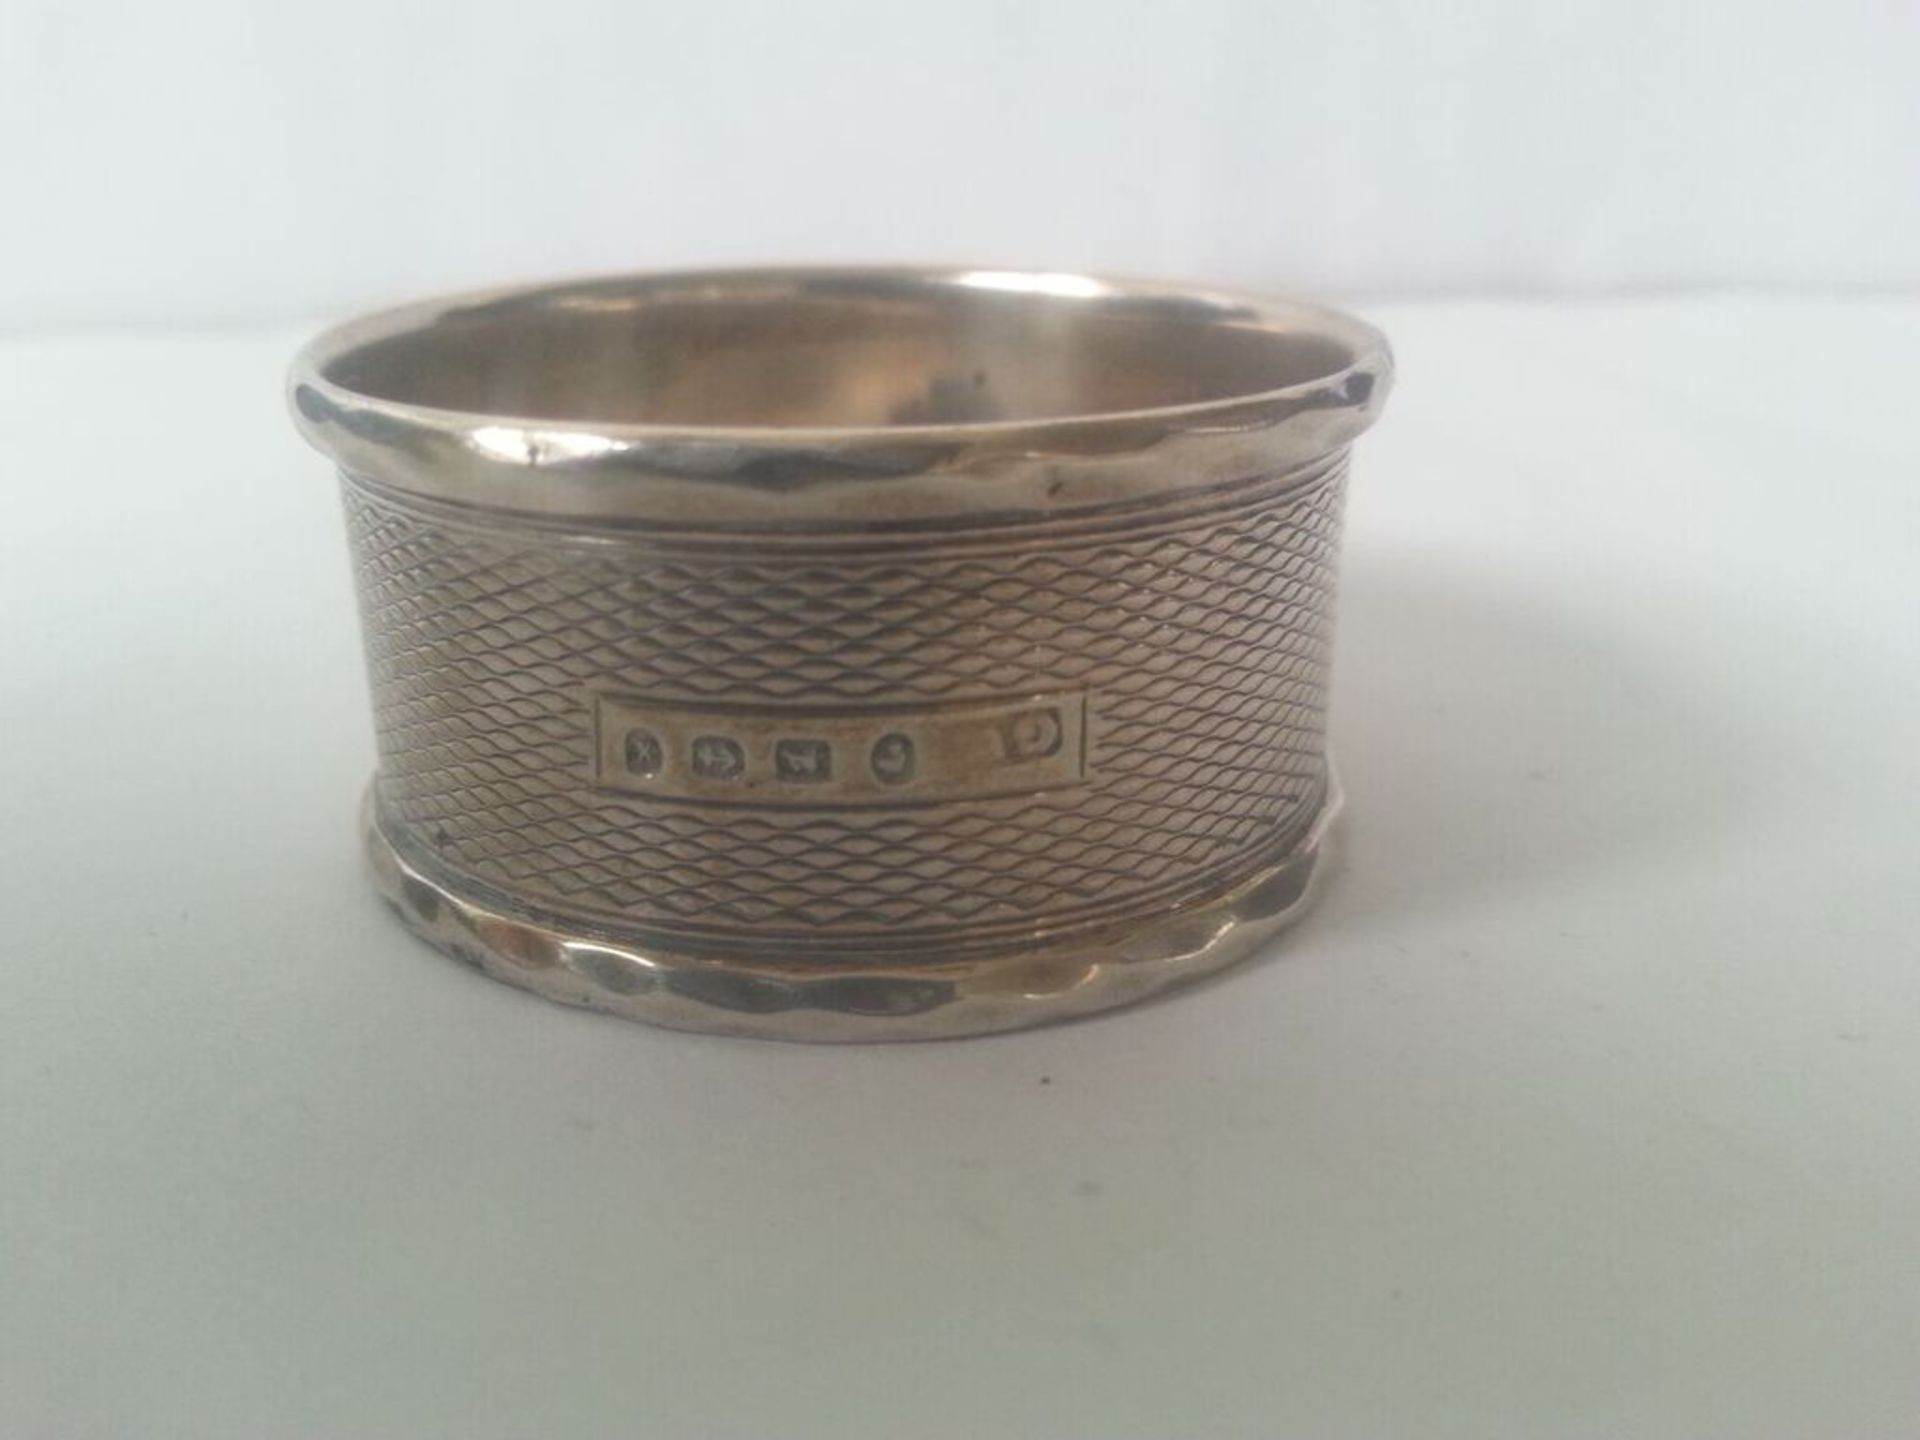 Late 19th Century hallmarked Birmingham silver napkin ring, engraved "Maureen"